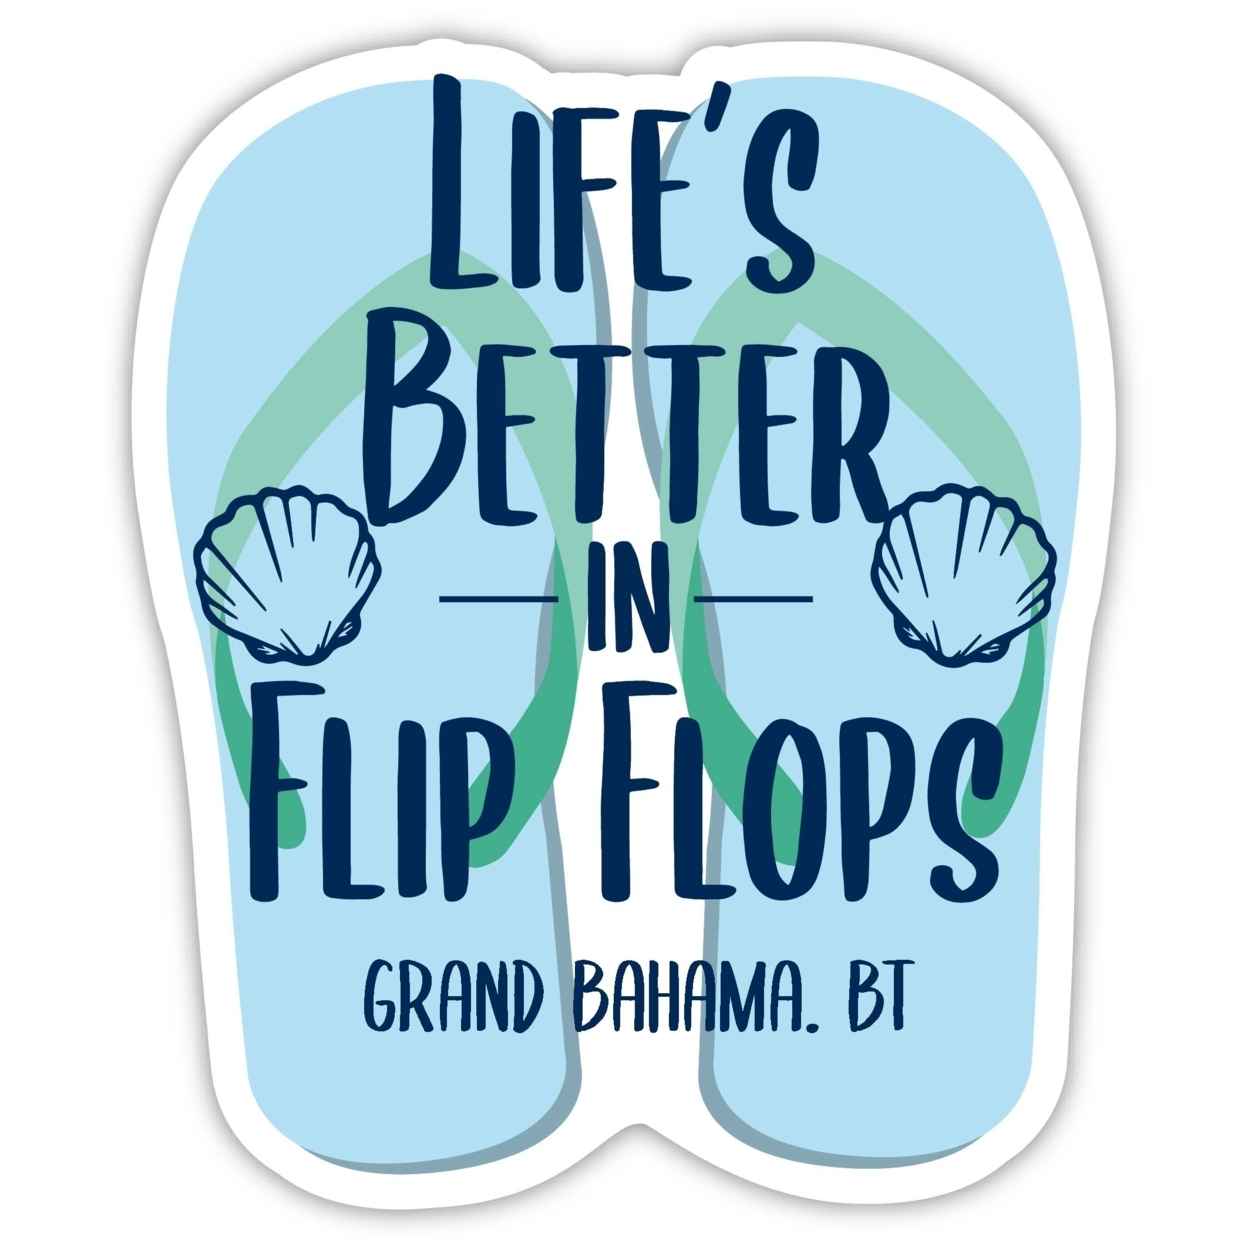 Grand Bahama The Bahamas Souvenir 4 Inch Vinyl Decal Sticker Flip Flop Design